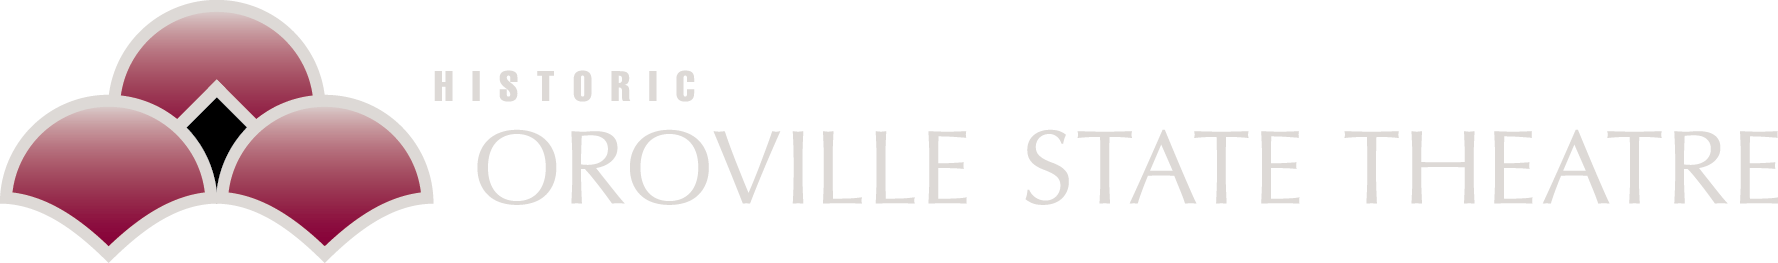 Oroville State Theatre